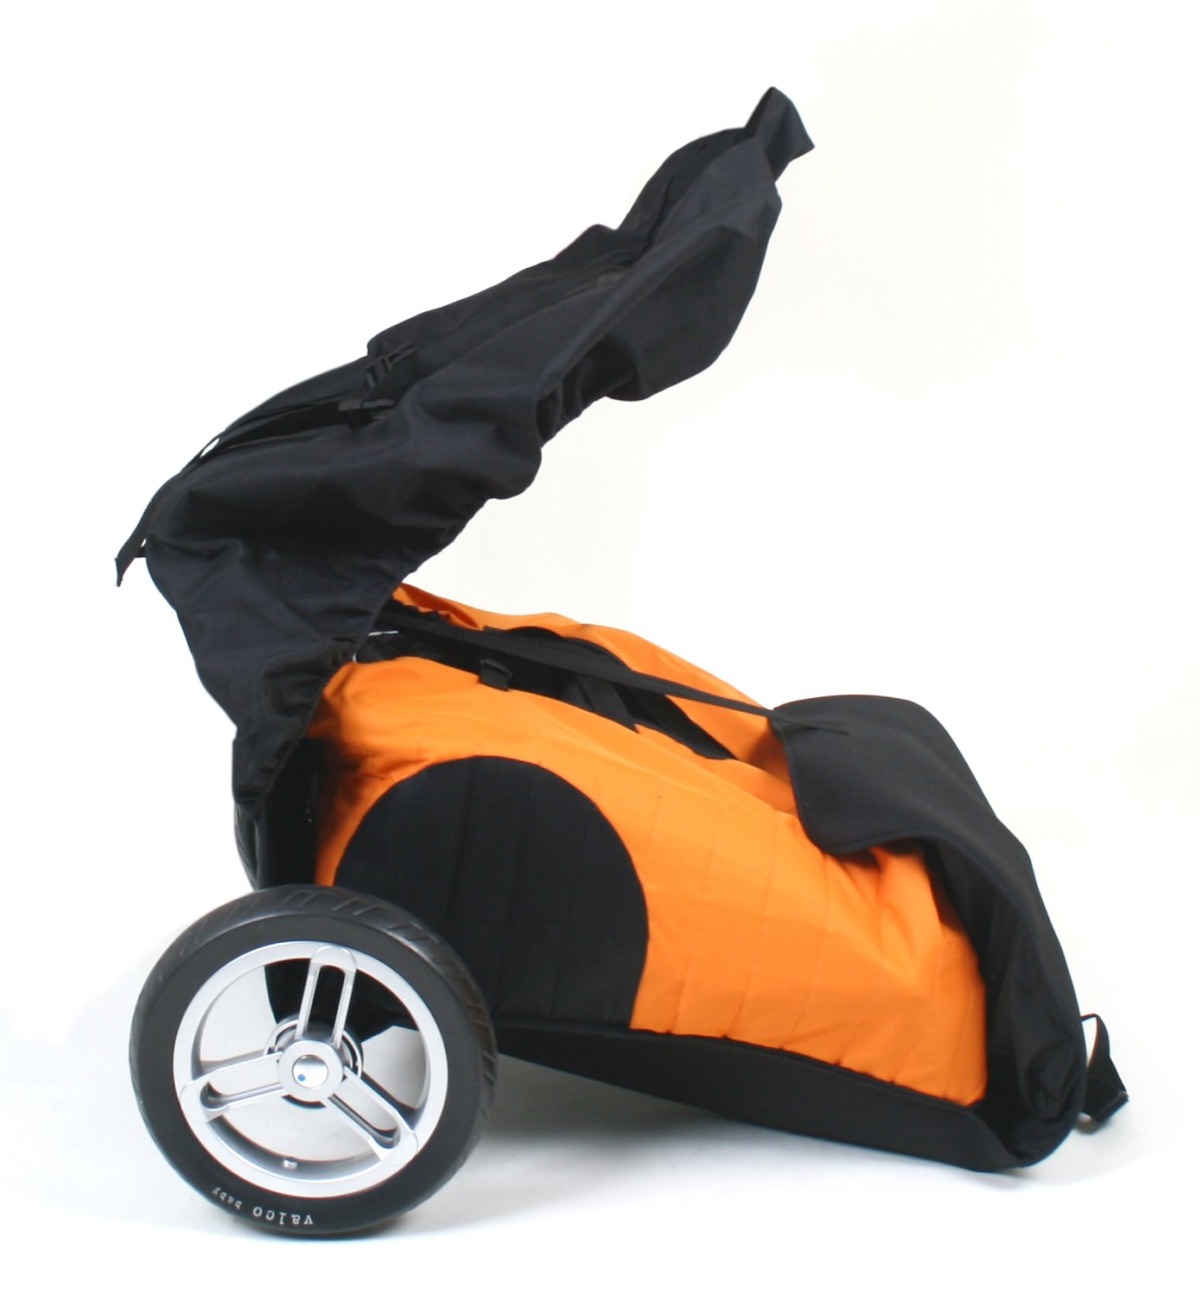 Valco Baby Universal Stroller Roller Travel Bag, Orange/Black | The Storepaperoomates Retail Market - Fast Affordable Shopping